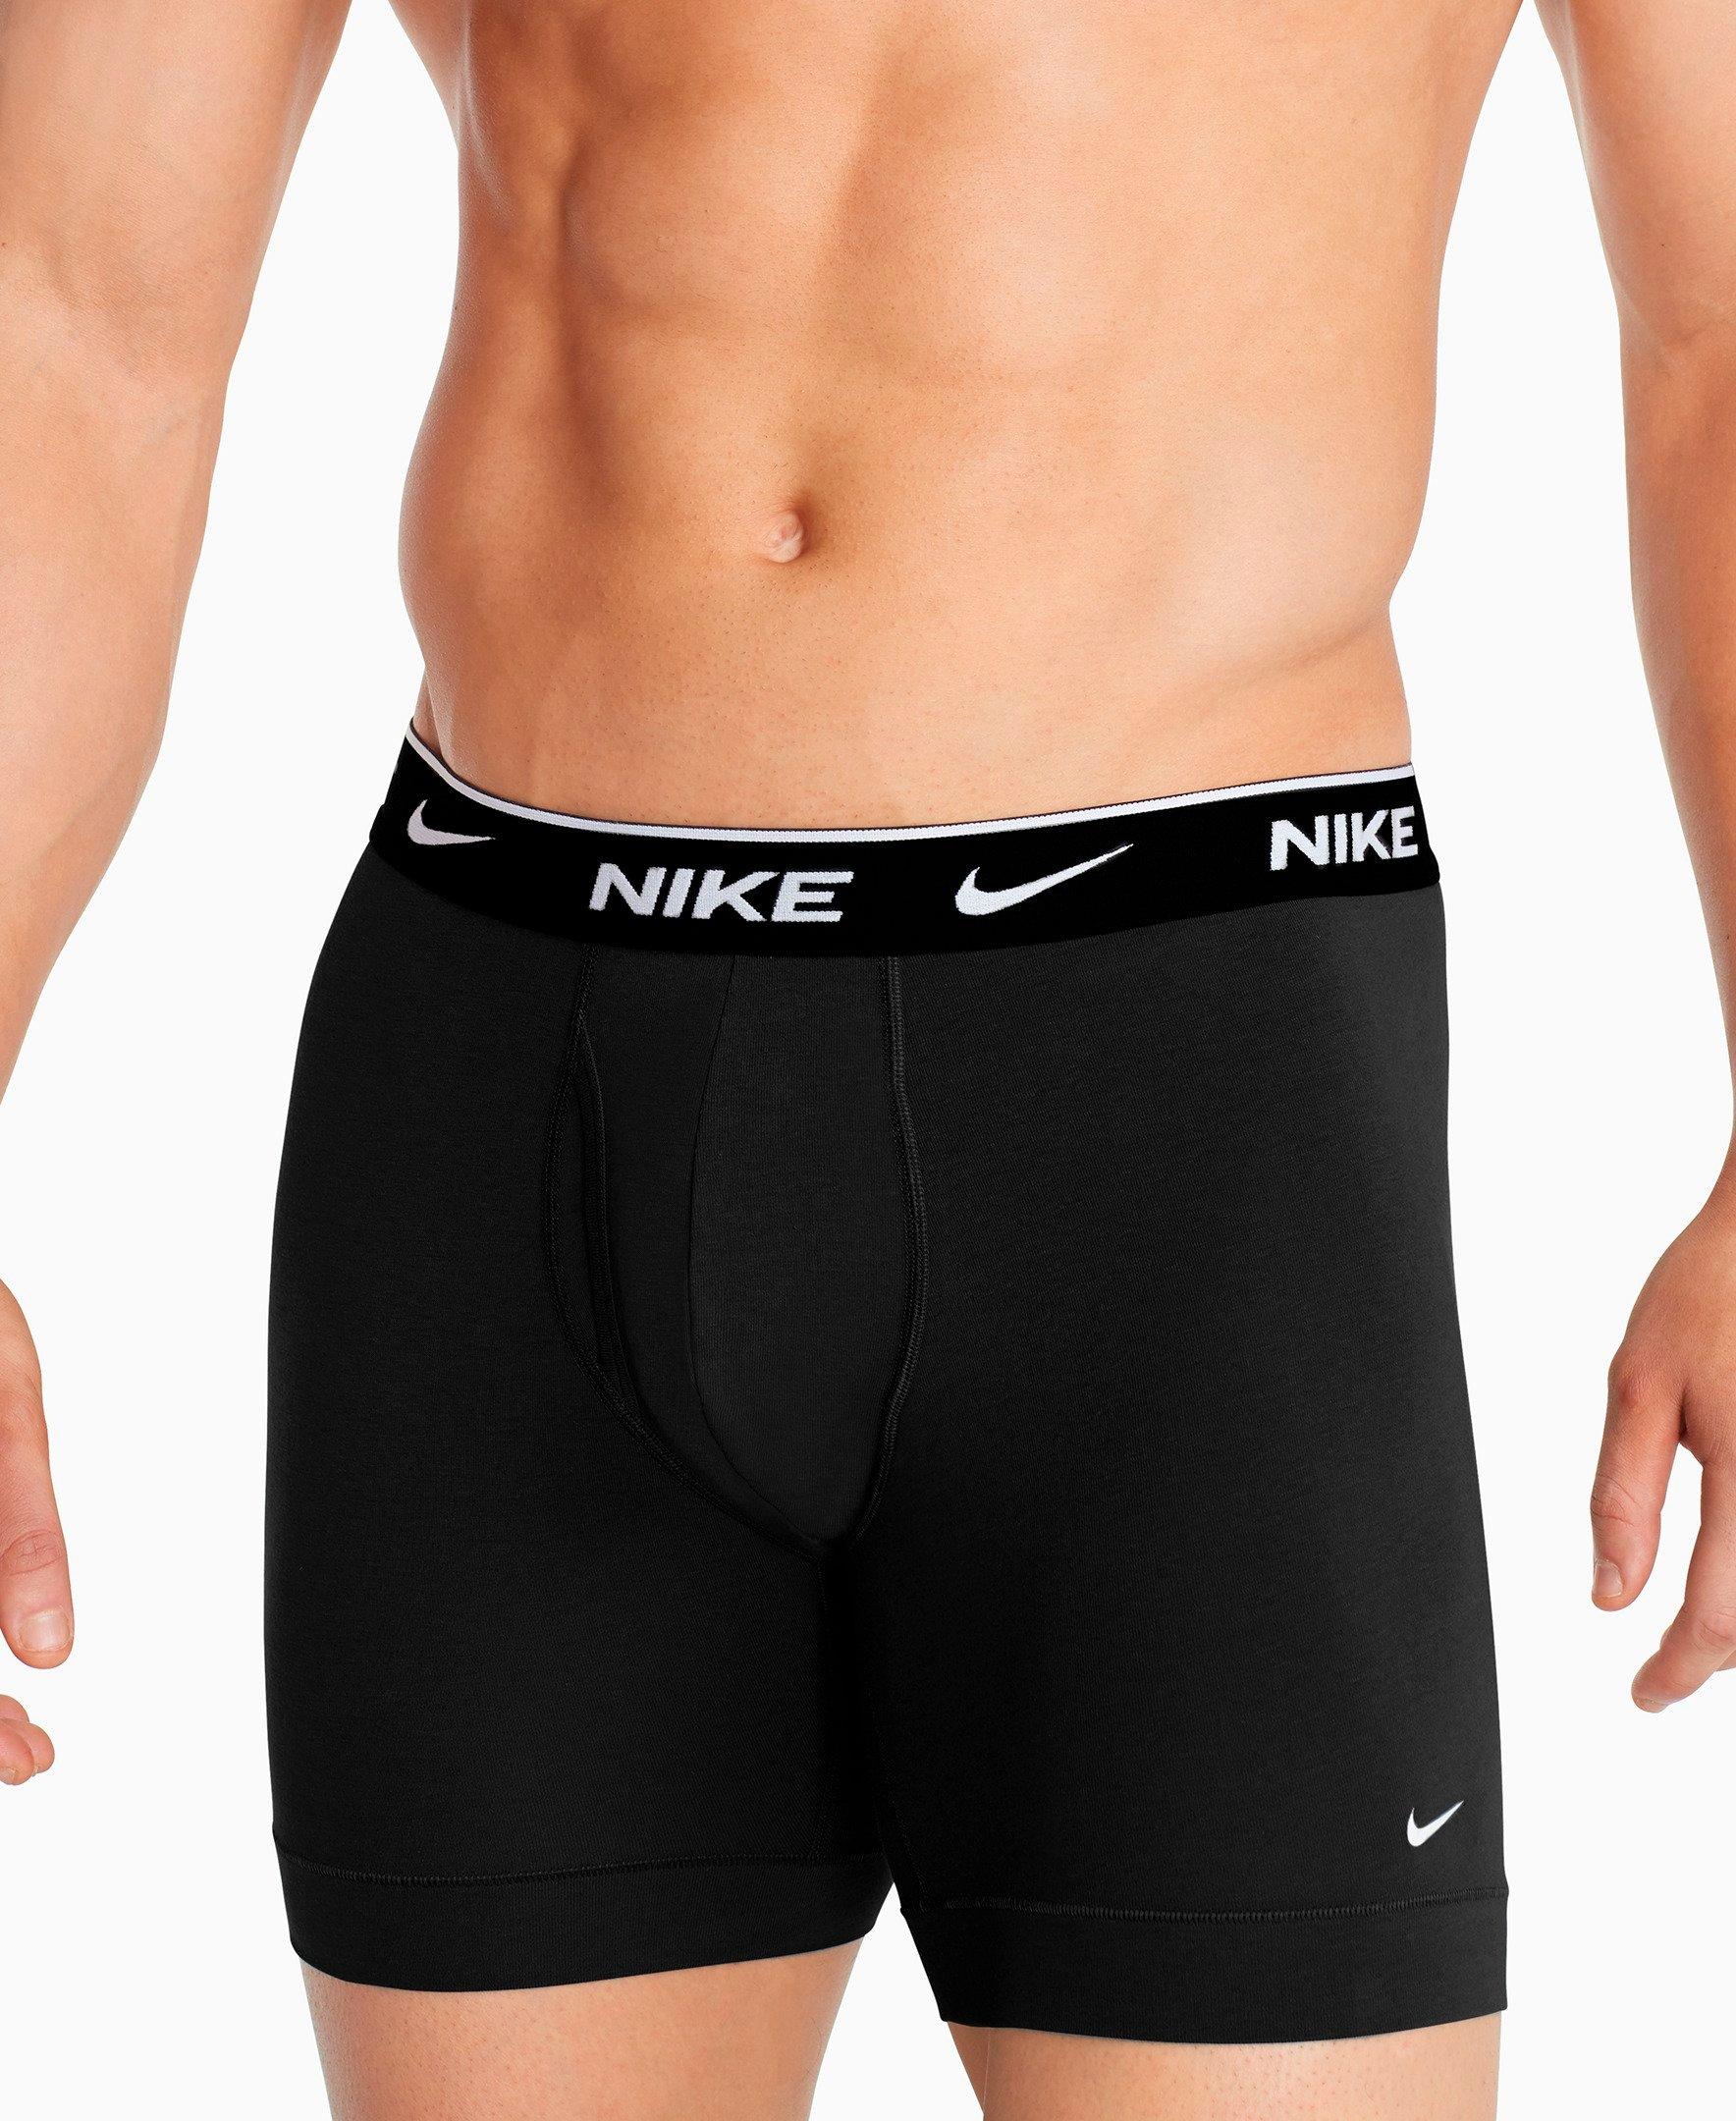 nike underwear pack